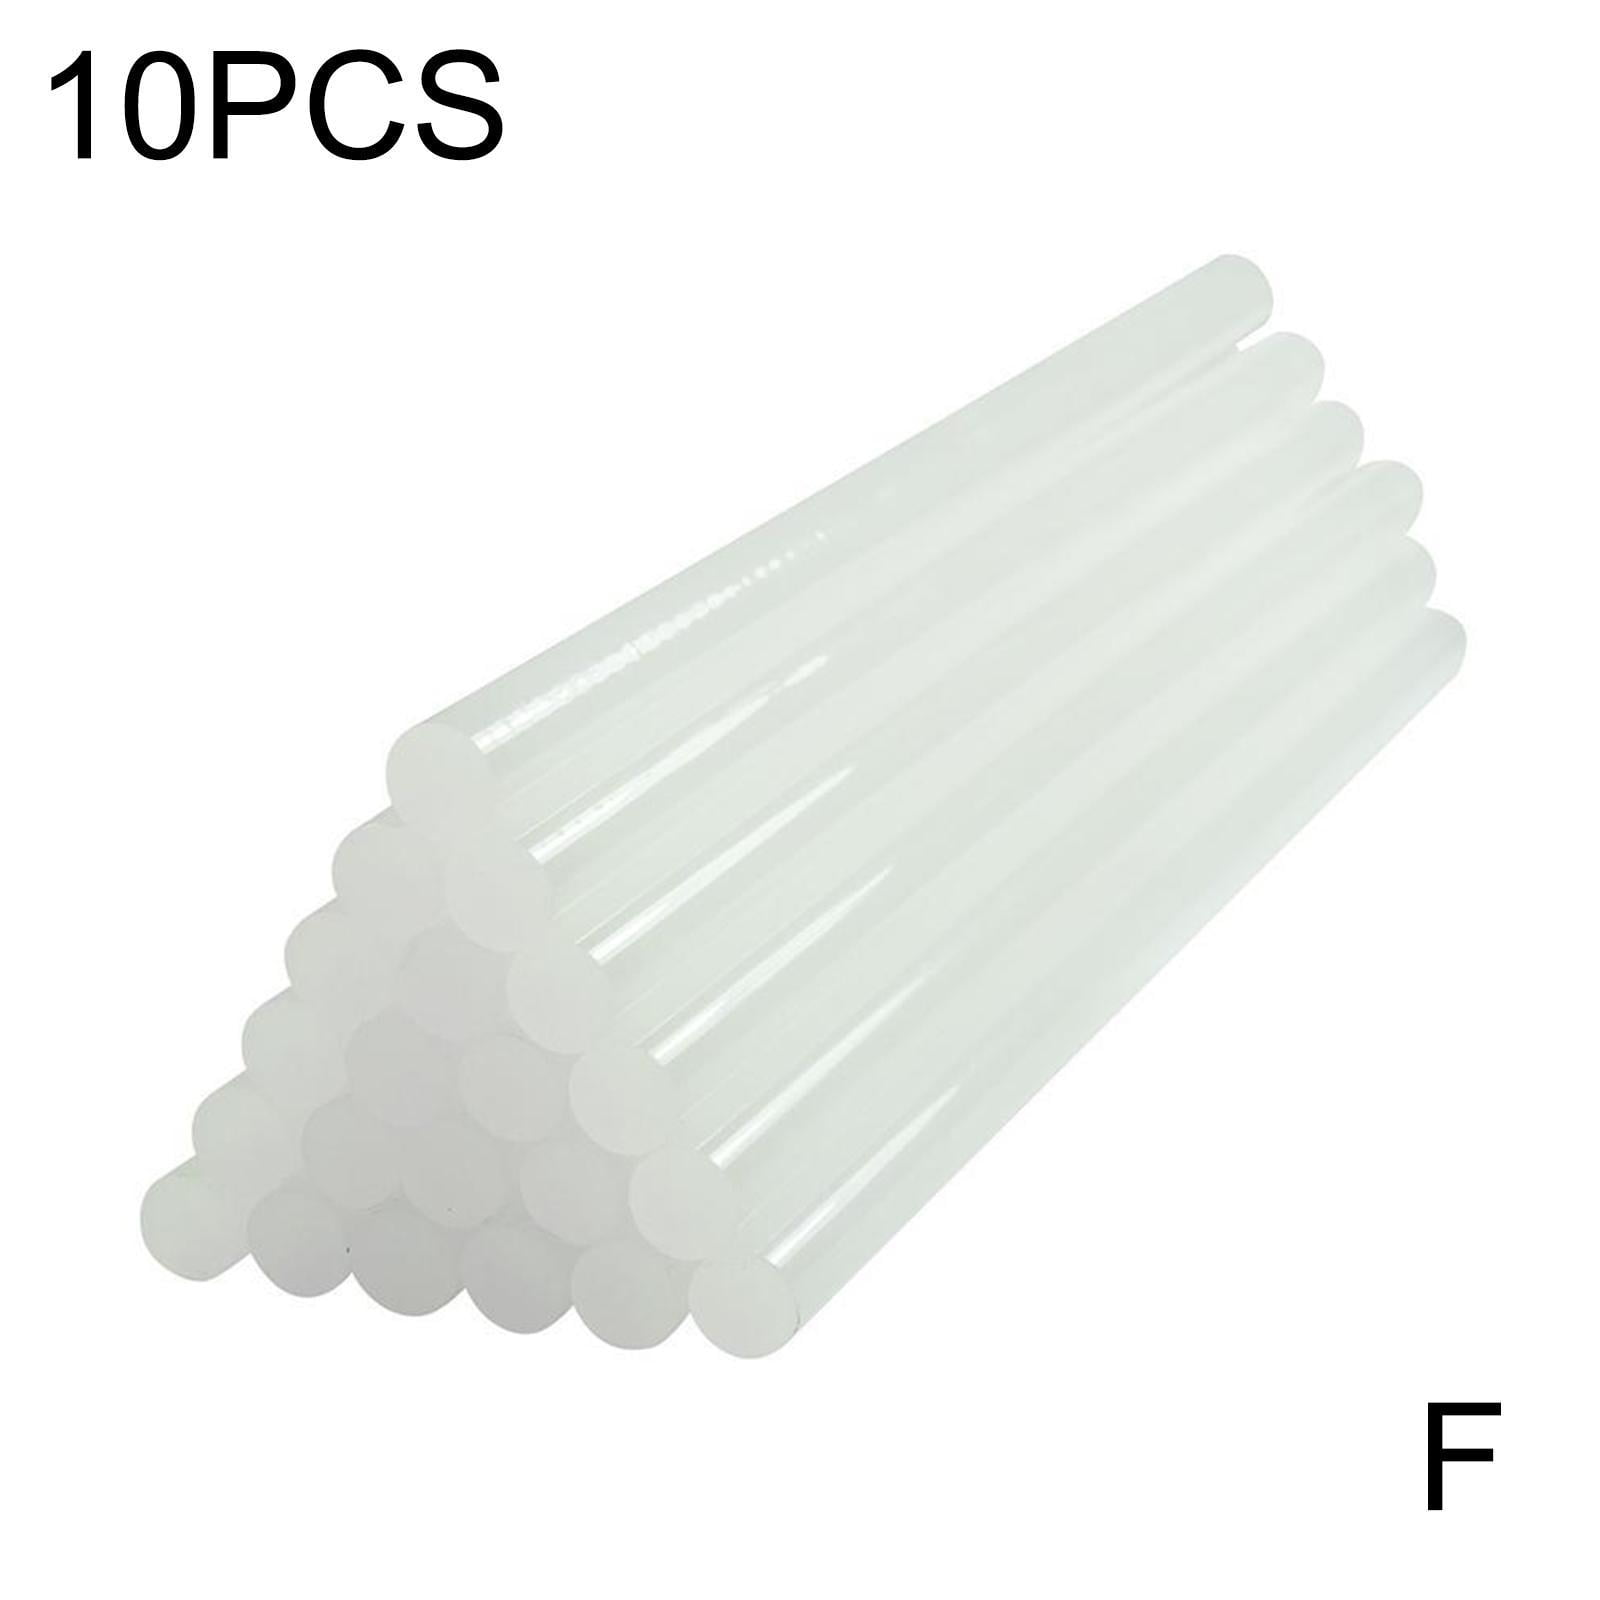 10PCS 188mm x 11mm Black Hot Melt Glue Sticks Binder for Electric Tool Glue